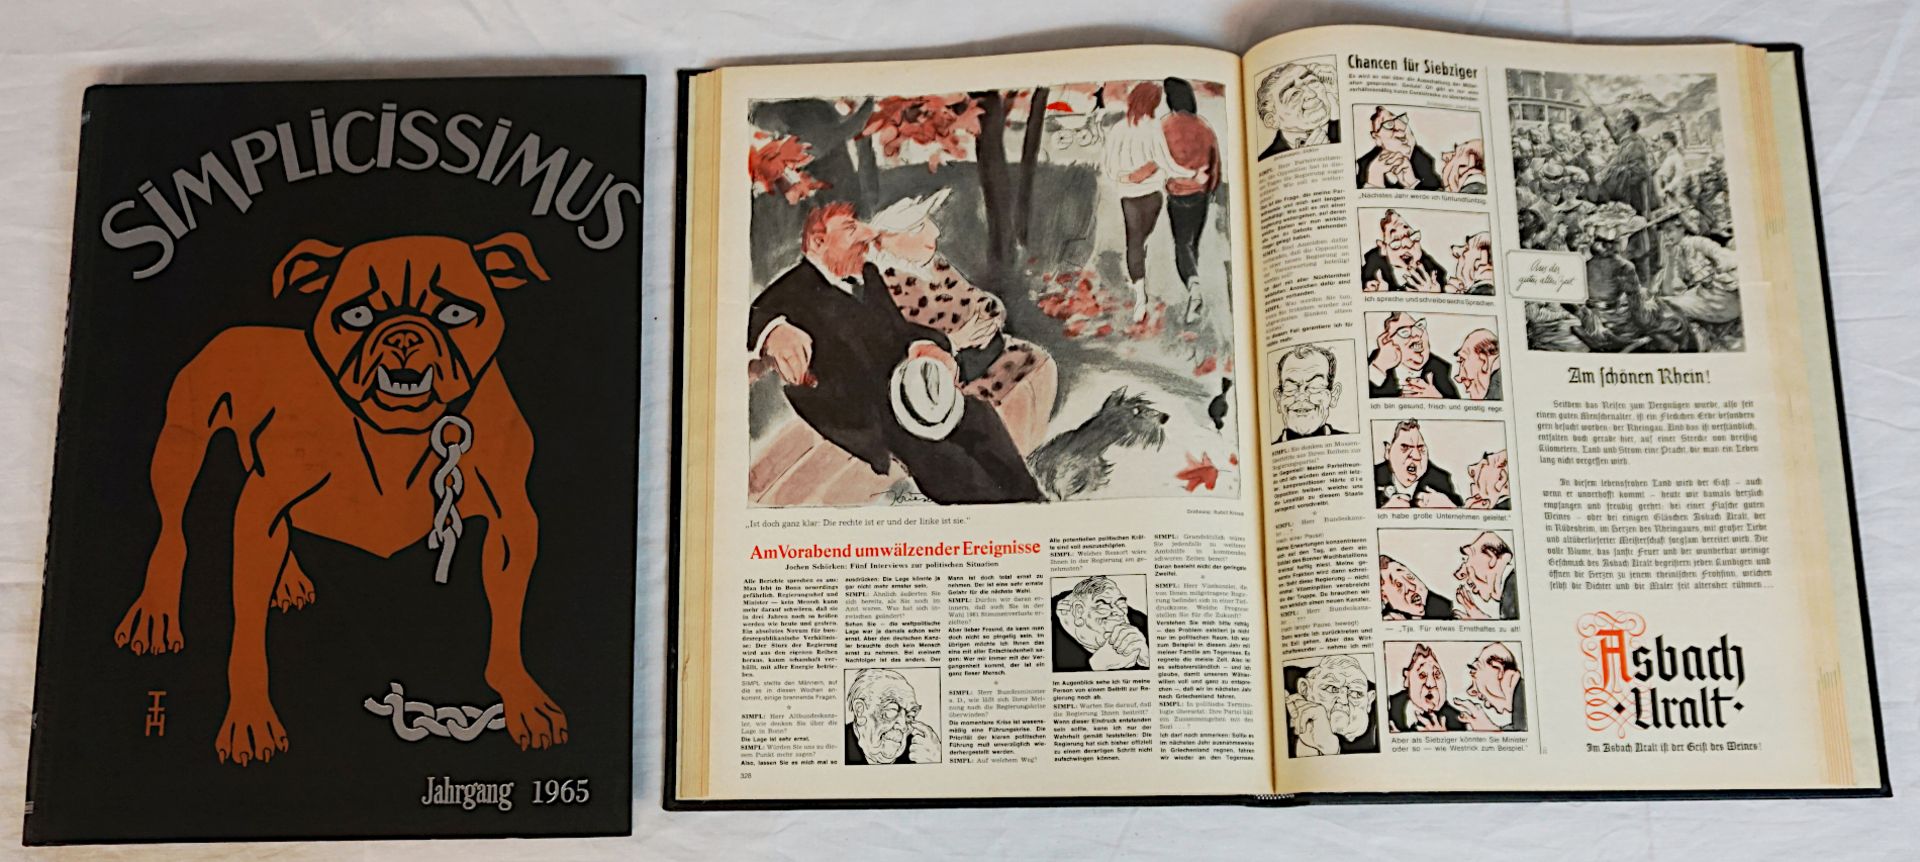 20 Sammelbände "Simplicissimus" Jahrgänge 1955-1966 (unkomplett): 19x mit farbillustrierten Original